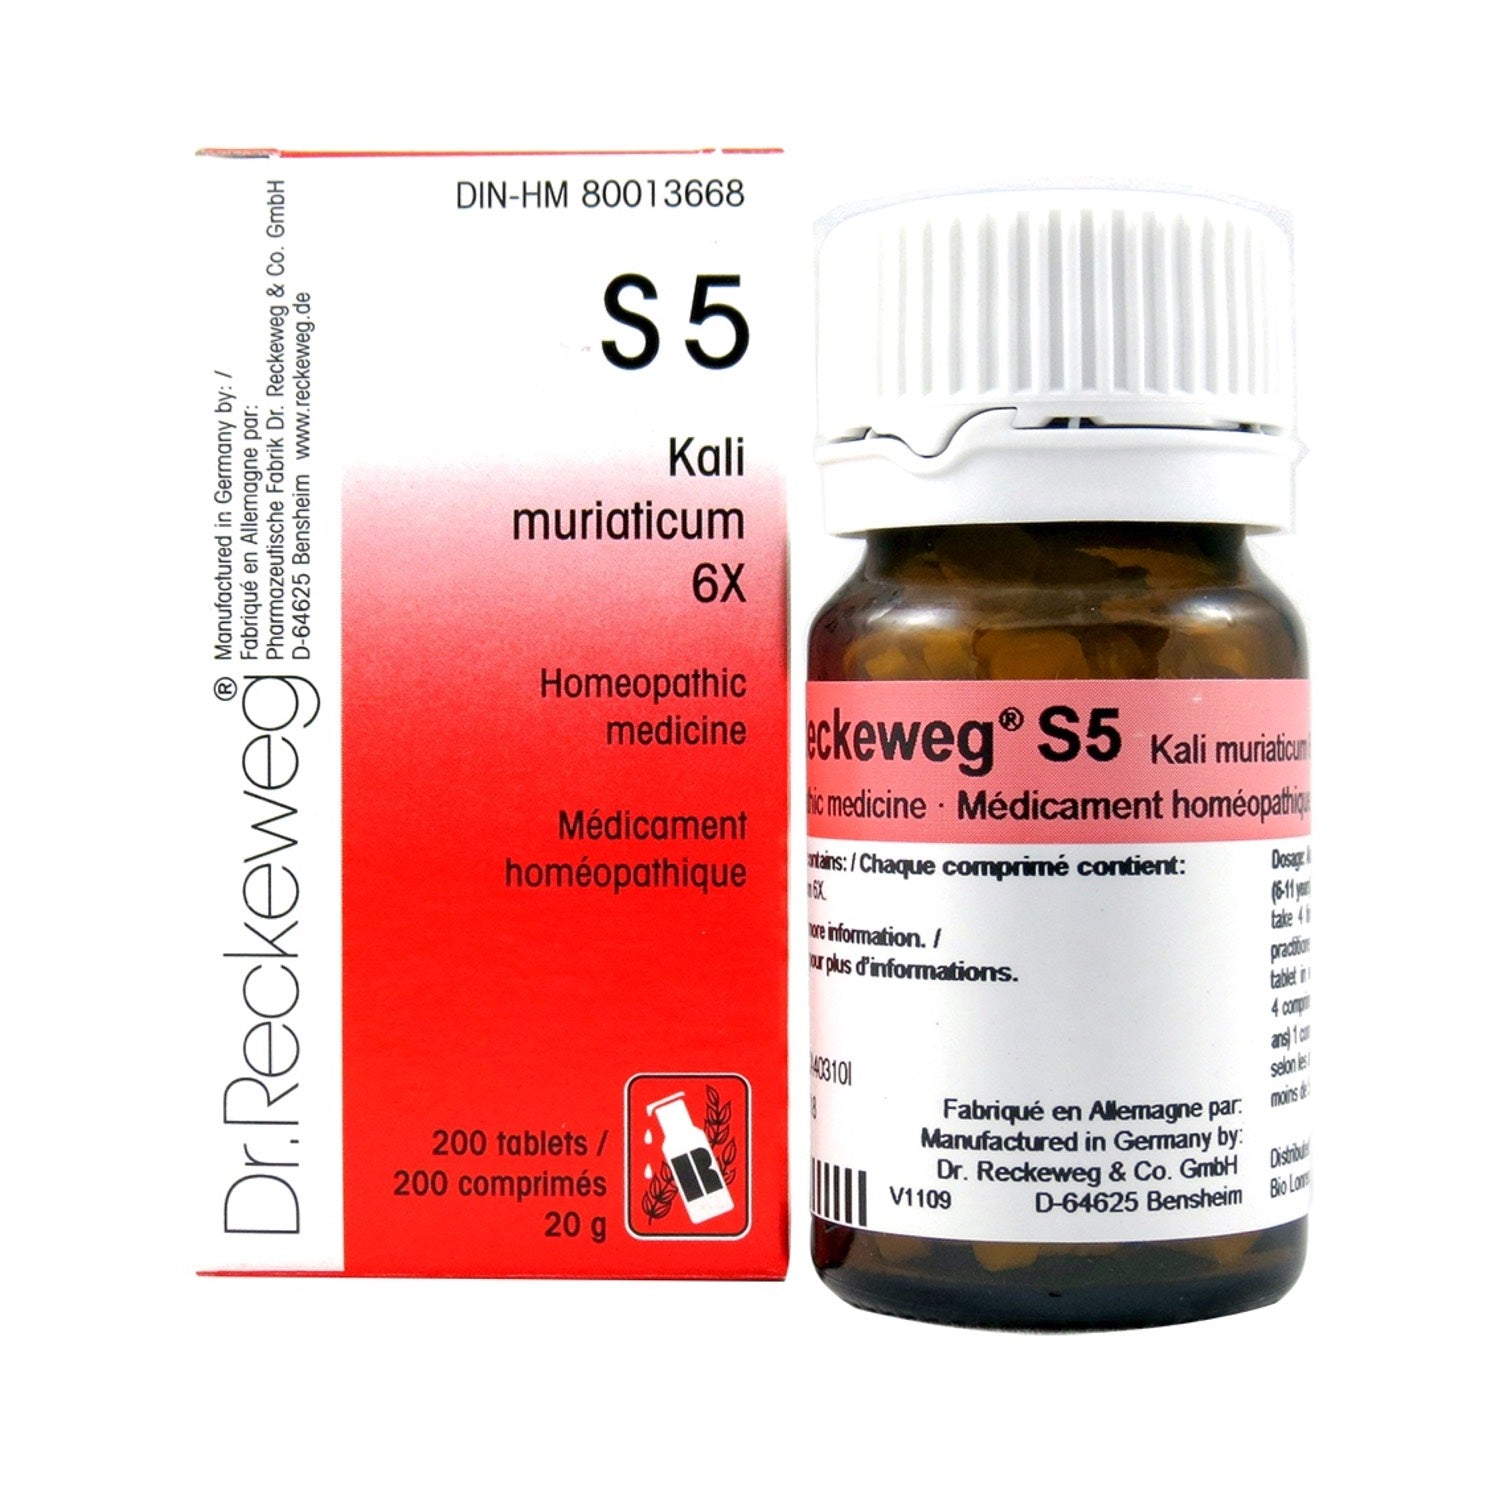 S5 Kali muriaticum Homeopathic medicine Schuessler salt 6X 200 tablets (20 g)